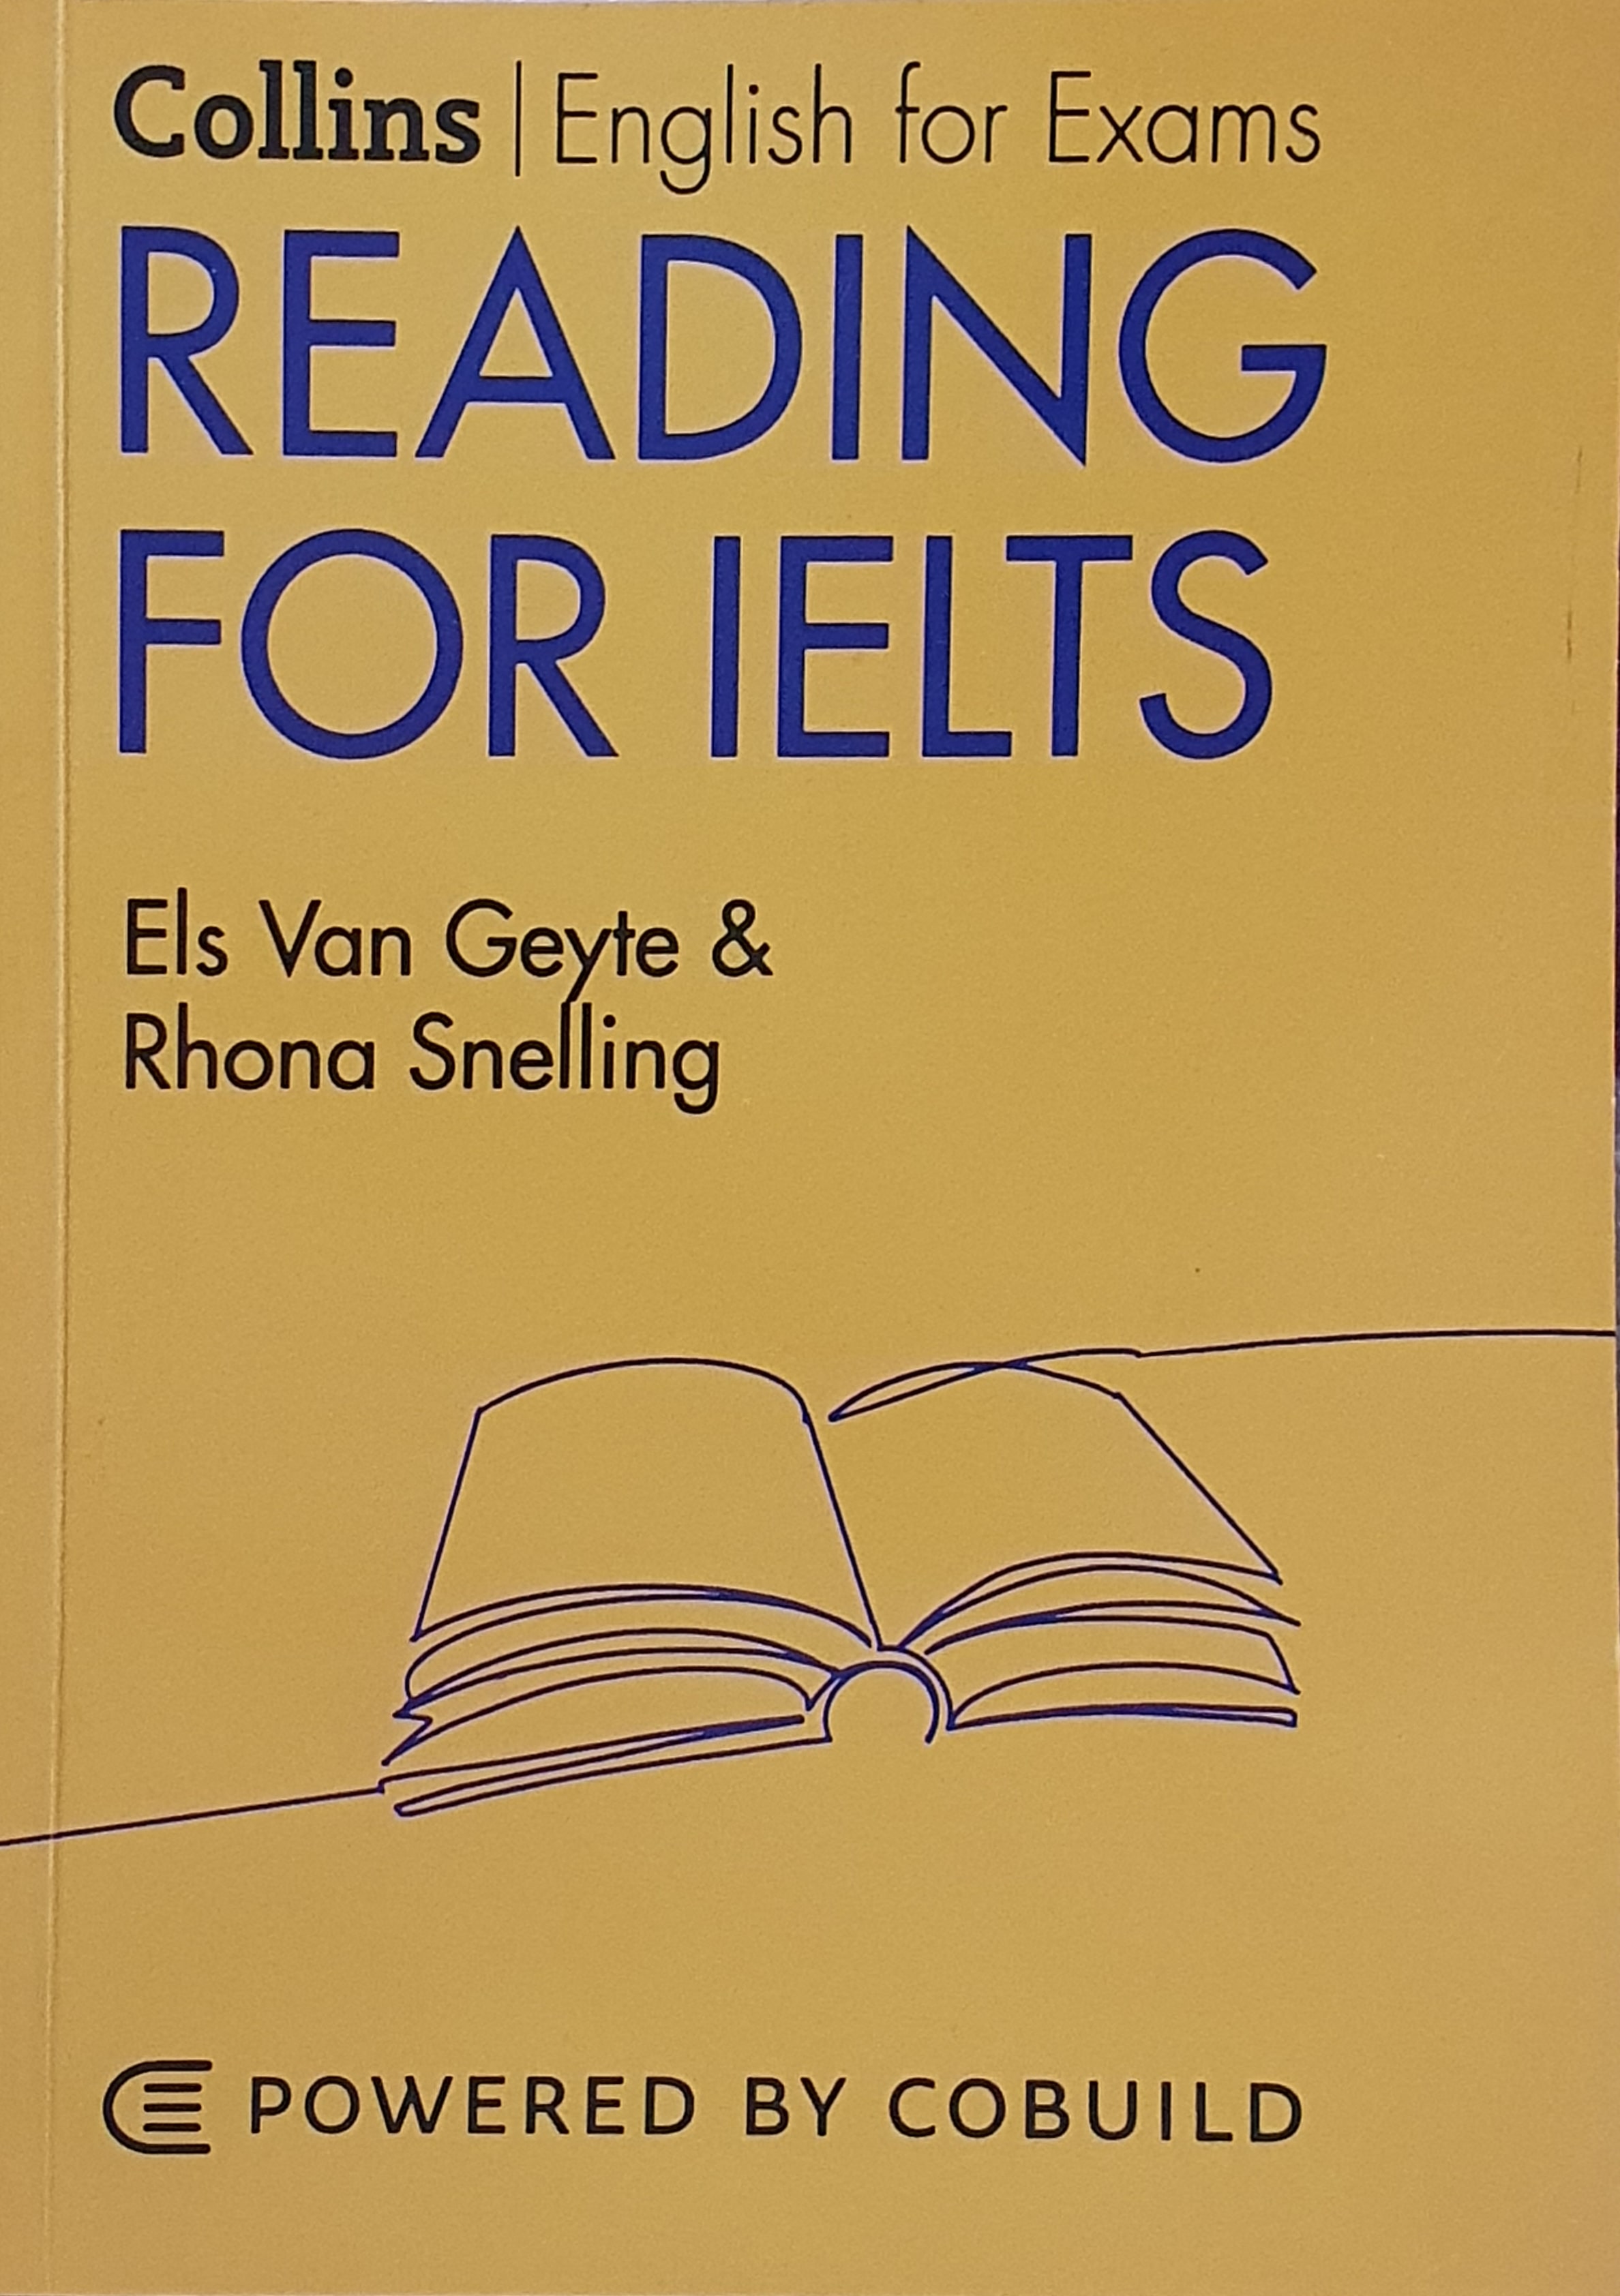 کتاب دست دوم Collins Reading for IELTS